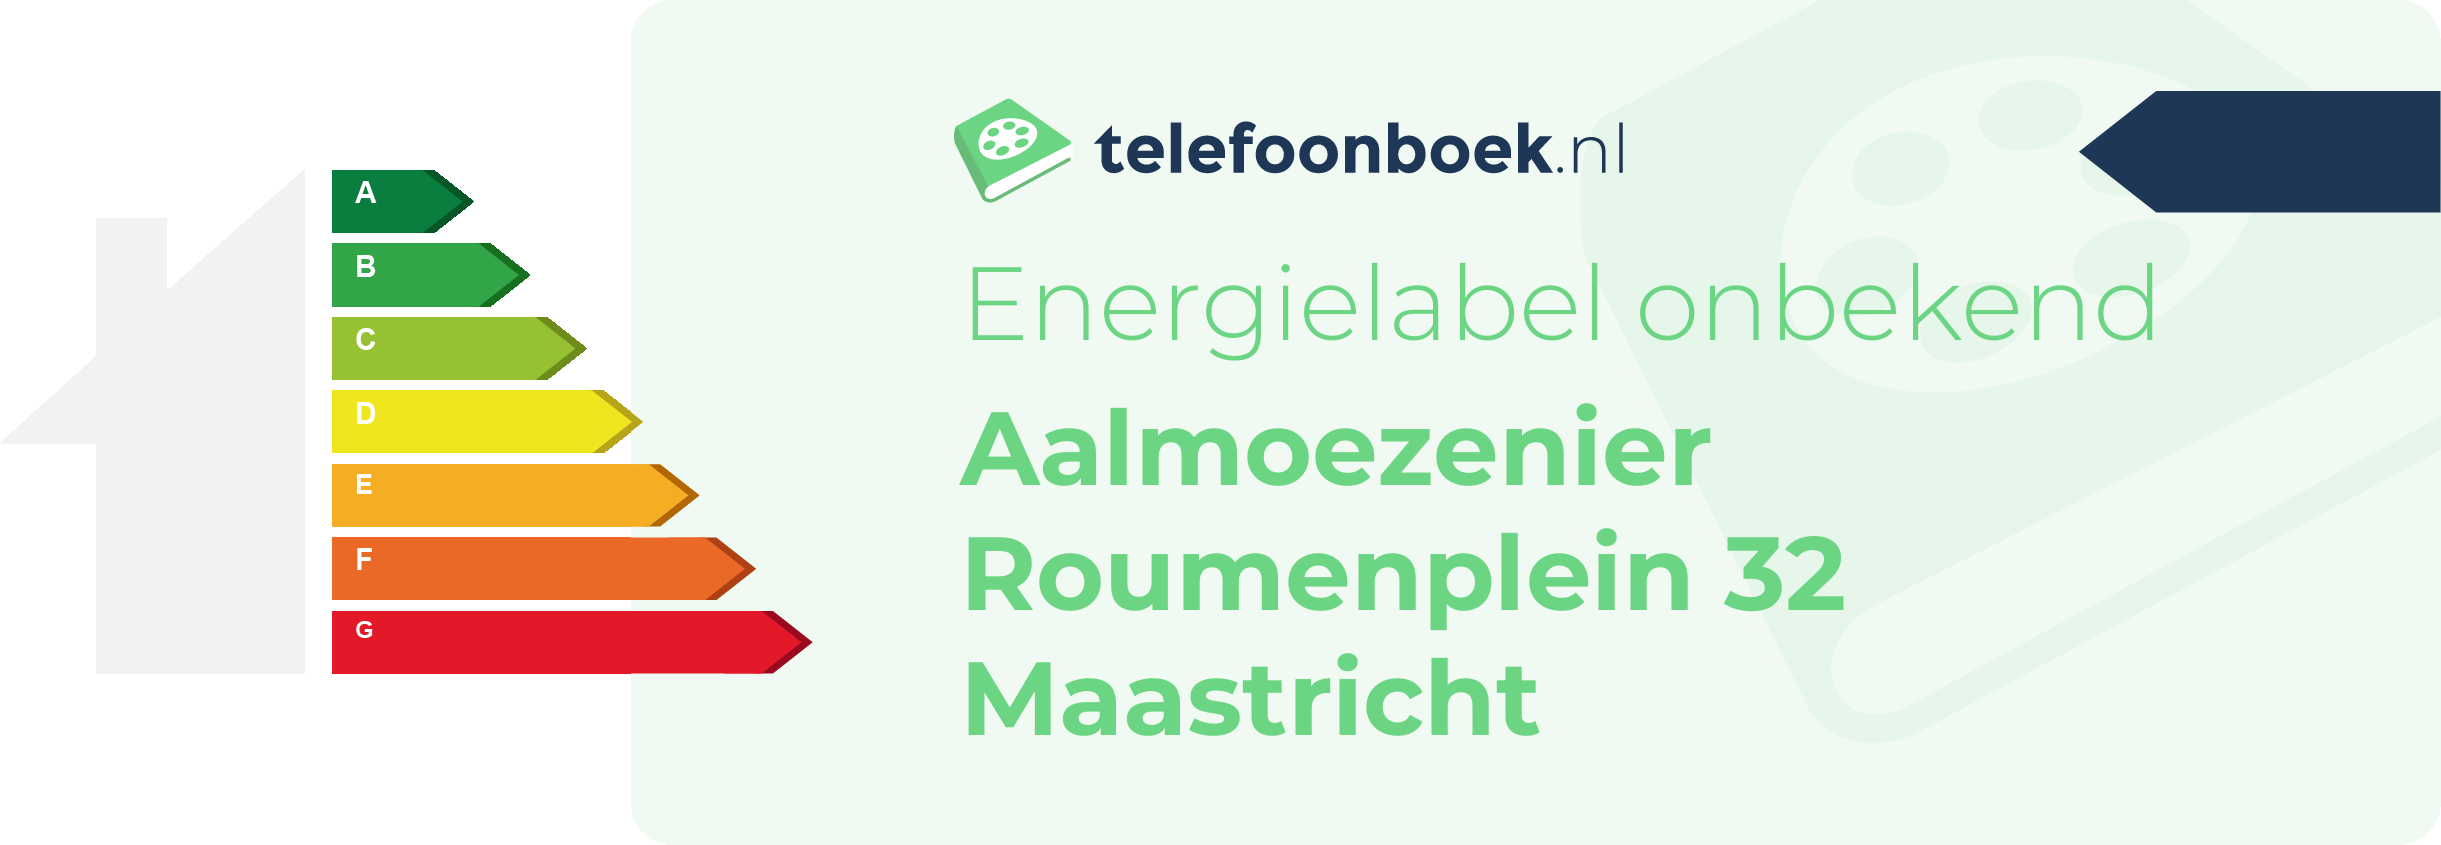 Energielabel Aalmoezenier Roumenplein 32 Maastricht